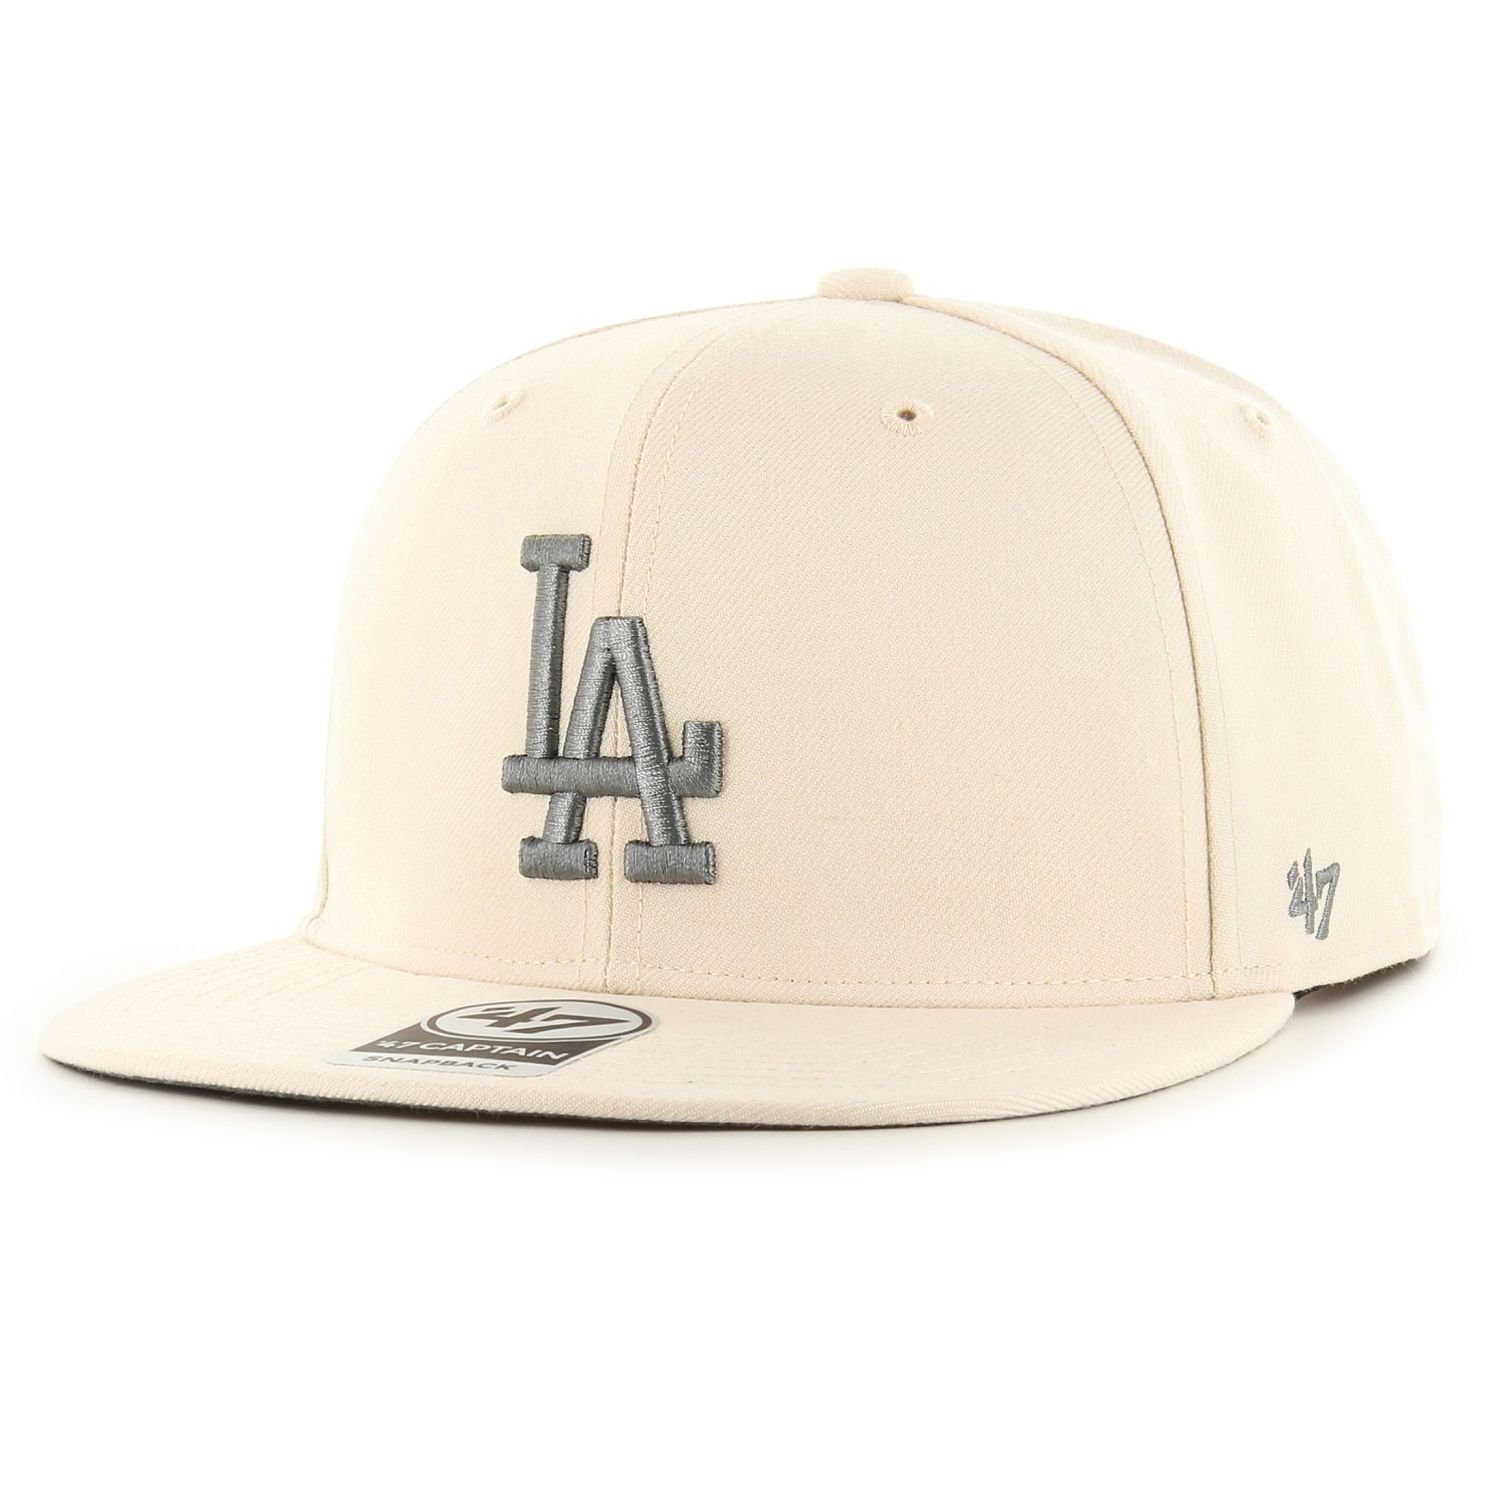 x27;47 Brand Snapback Cap Angeles Dodgers Los CAPTAIN